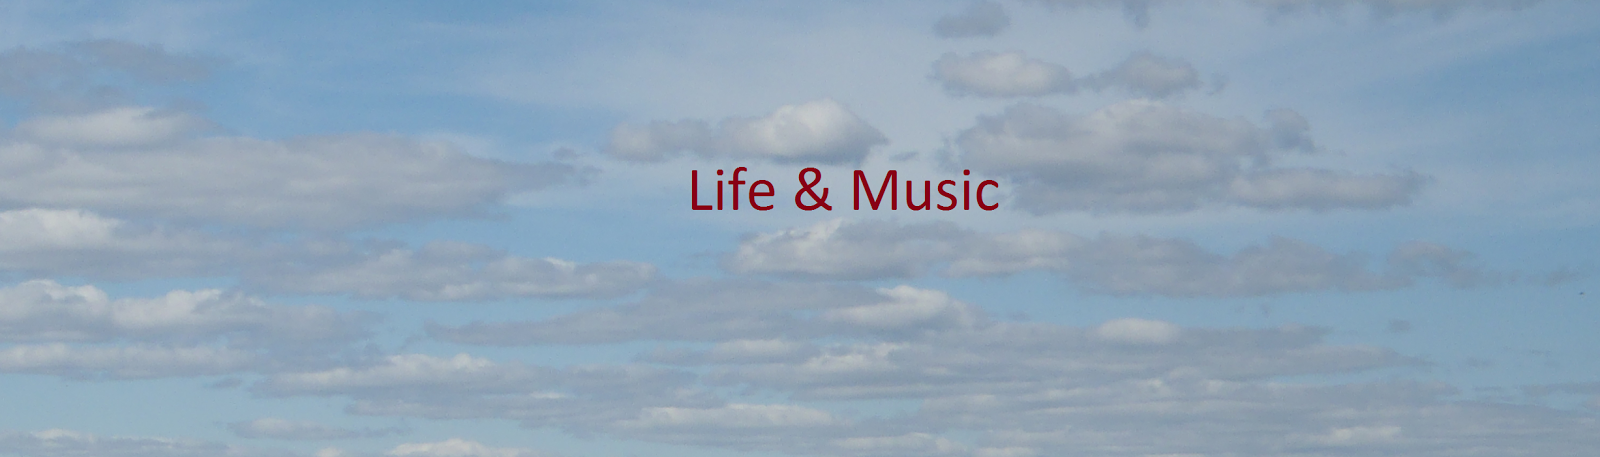 Life & Music